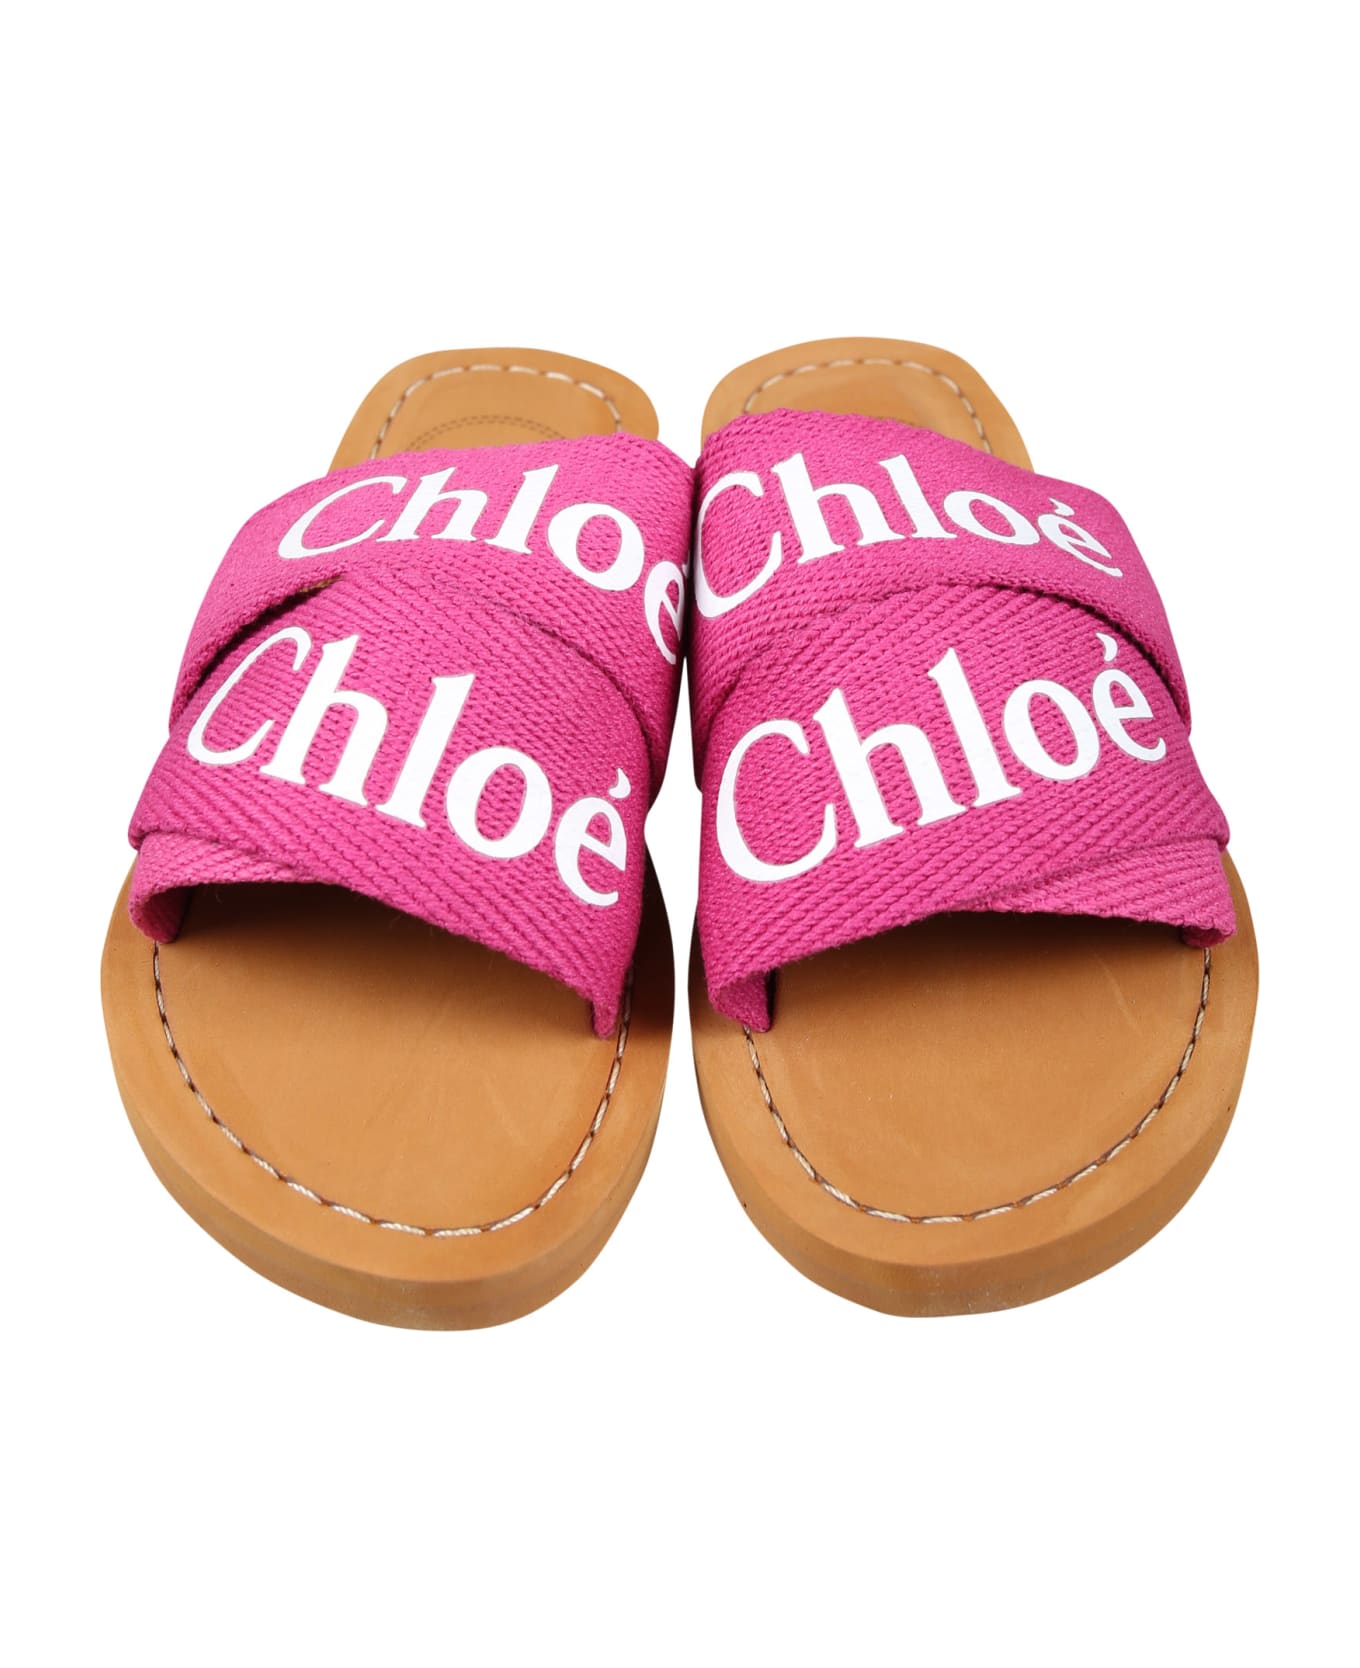 Chloé Fuchsia Slippers For Girl With Logo - Fuchsia シューズ